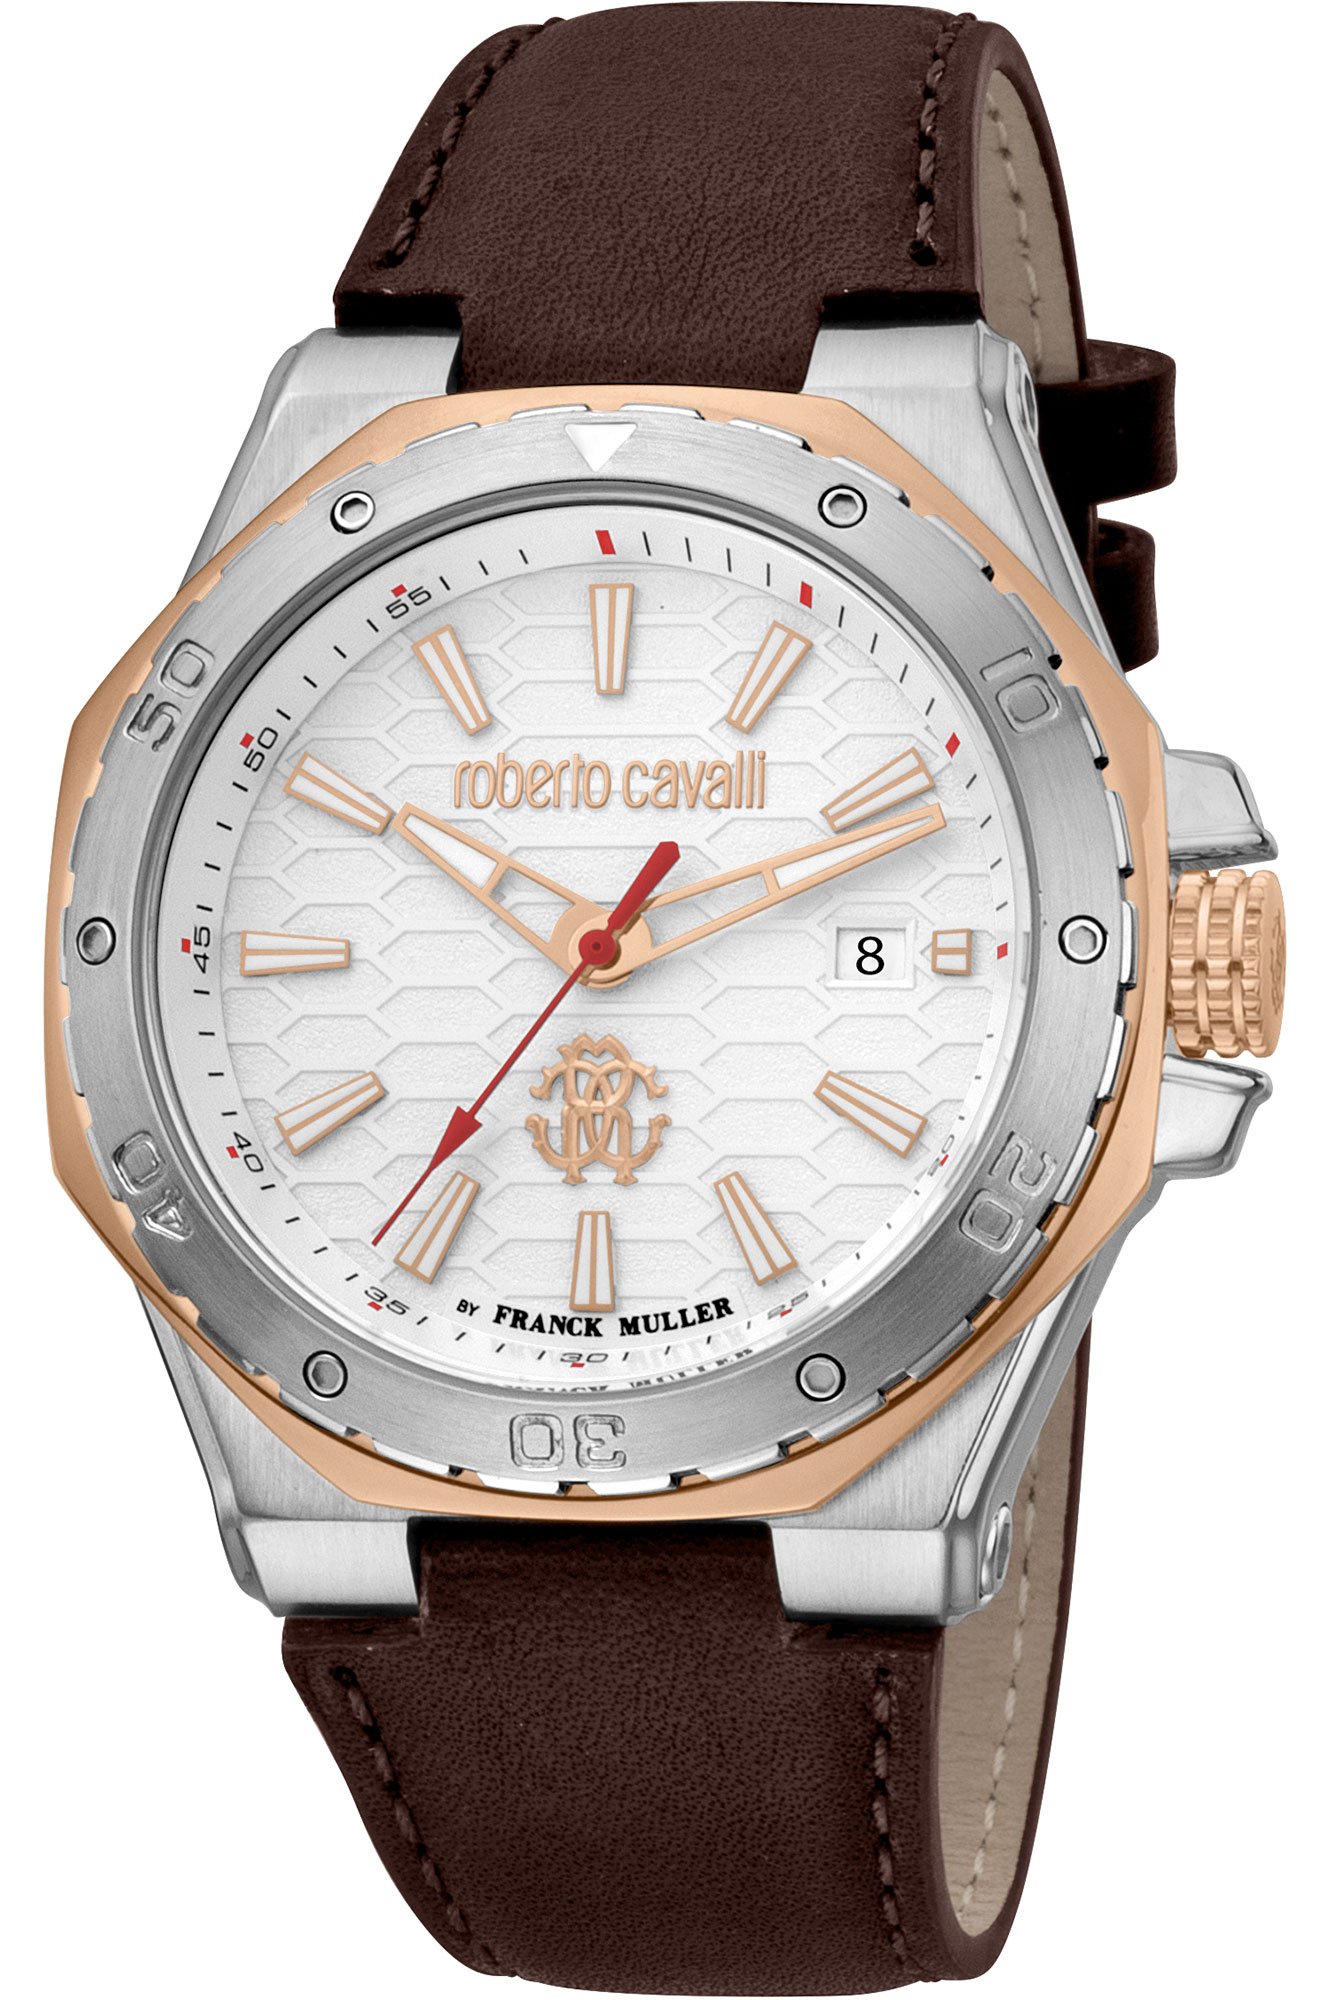 Watch Roberto Cavalli by Franck Muller rv1g122l0041